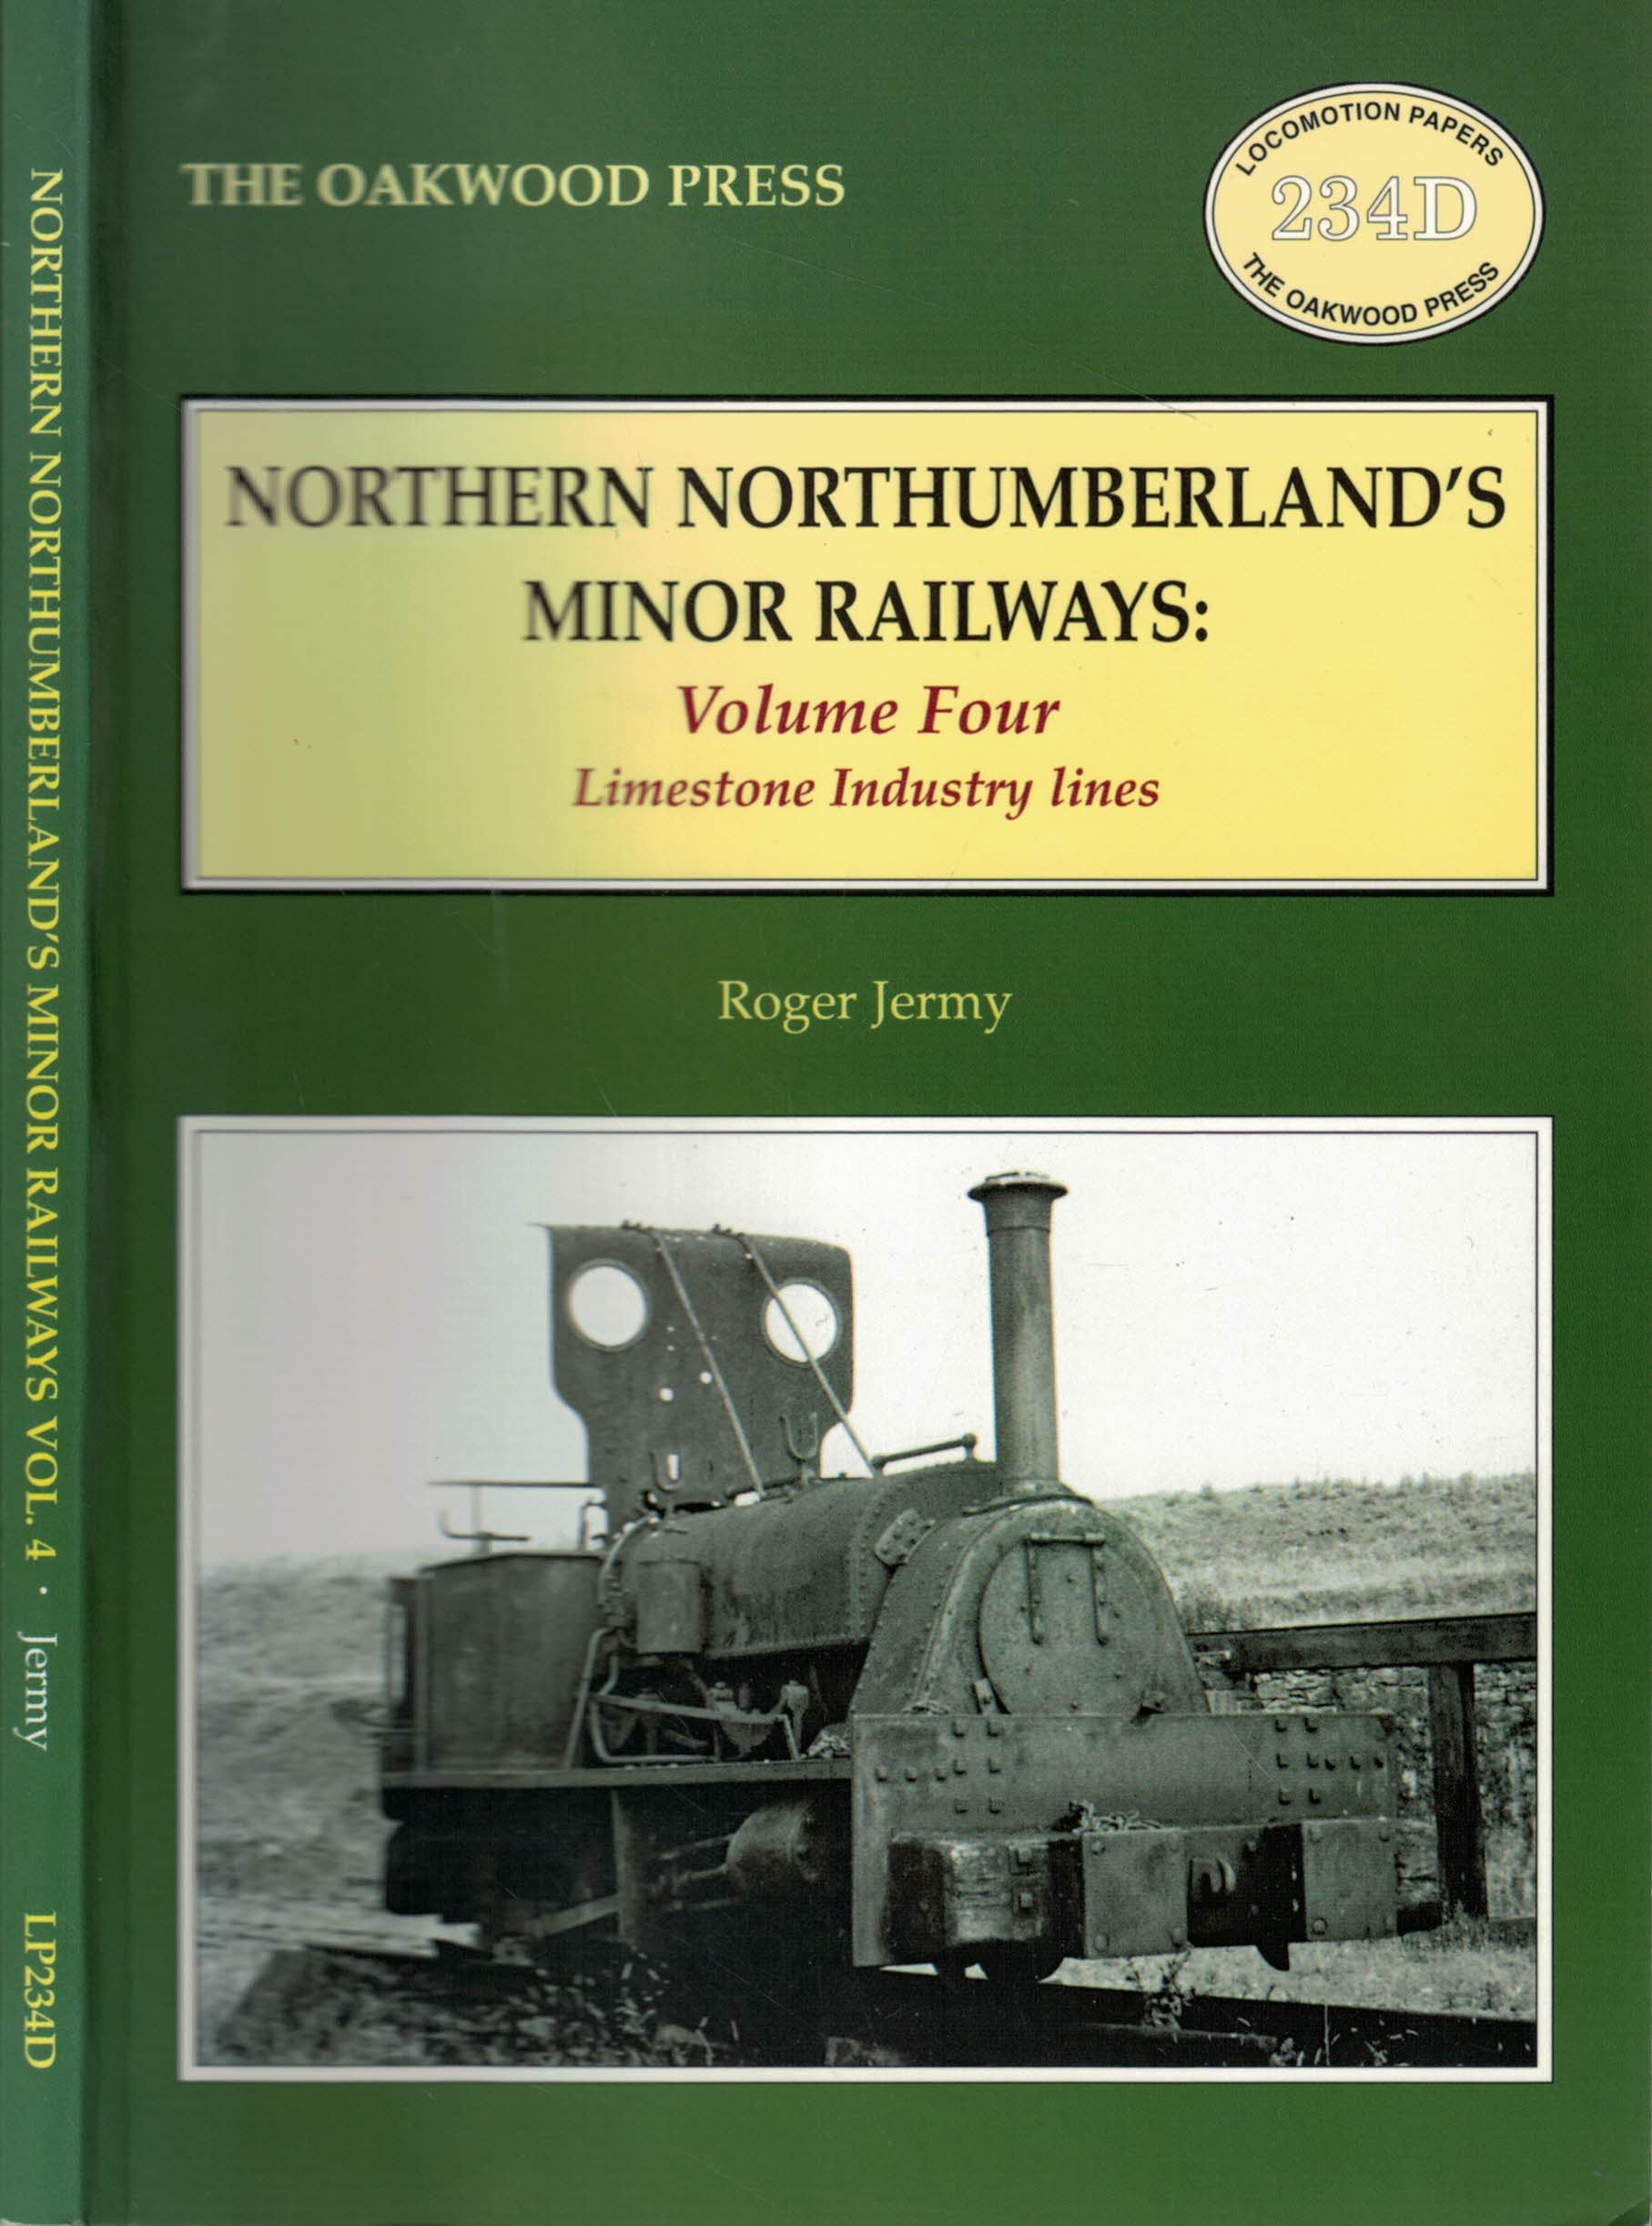 Northern Northumberland's Minor Railways: Volume Four. Limestone Industry Lines. Oakwood Locomotion Papers No 234D.